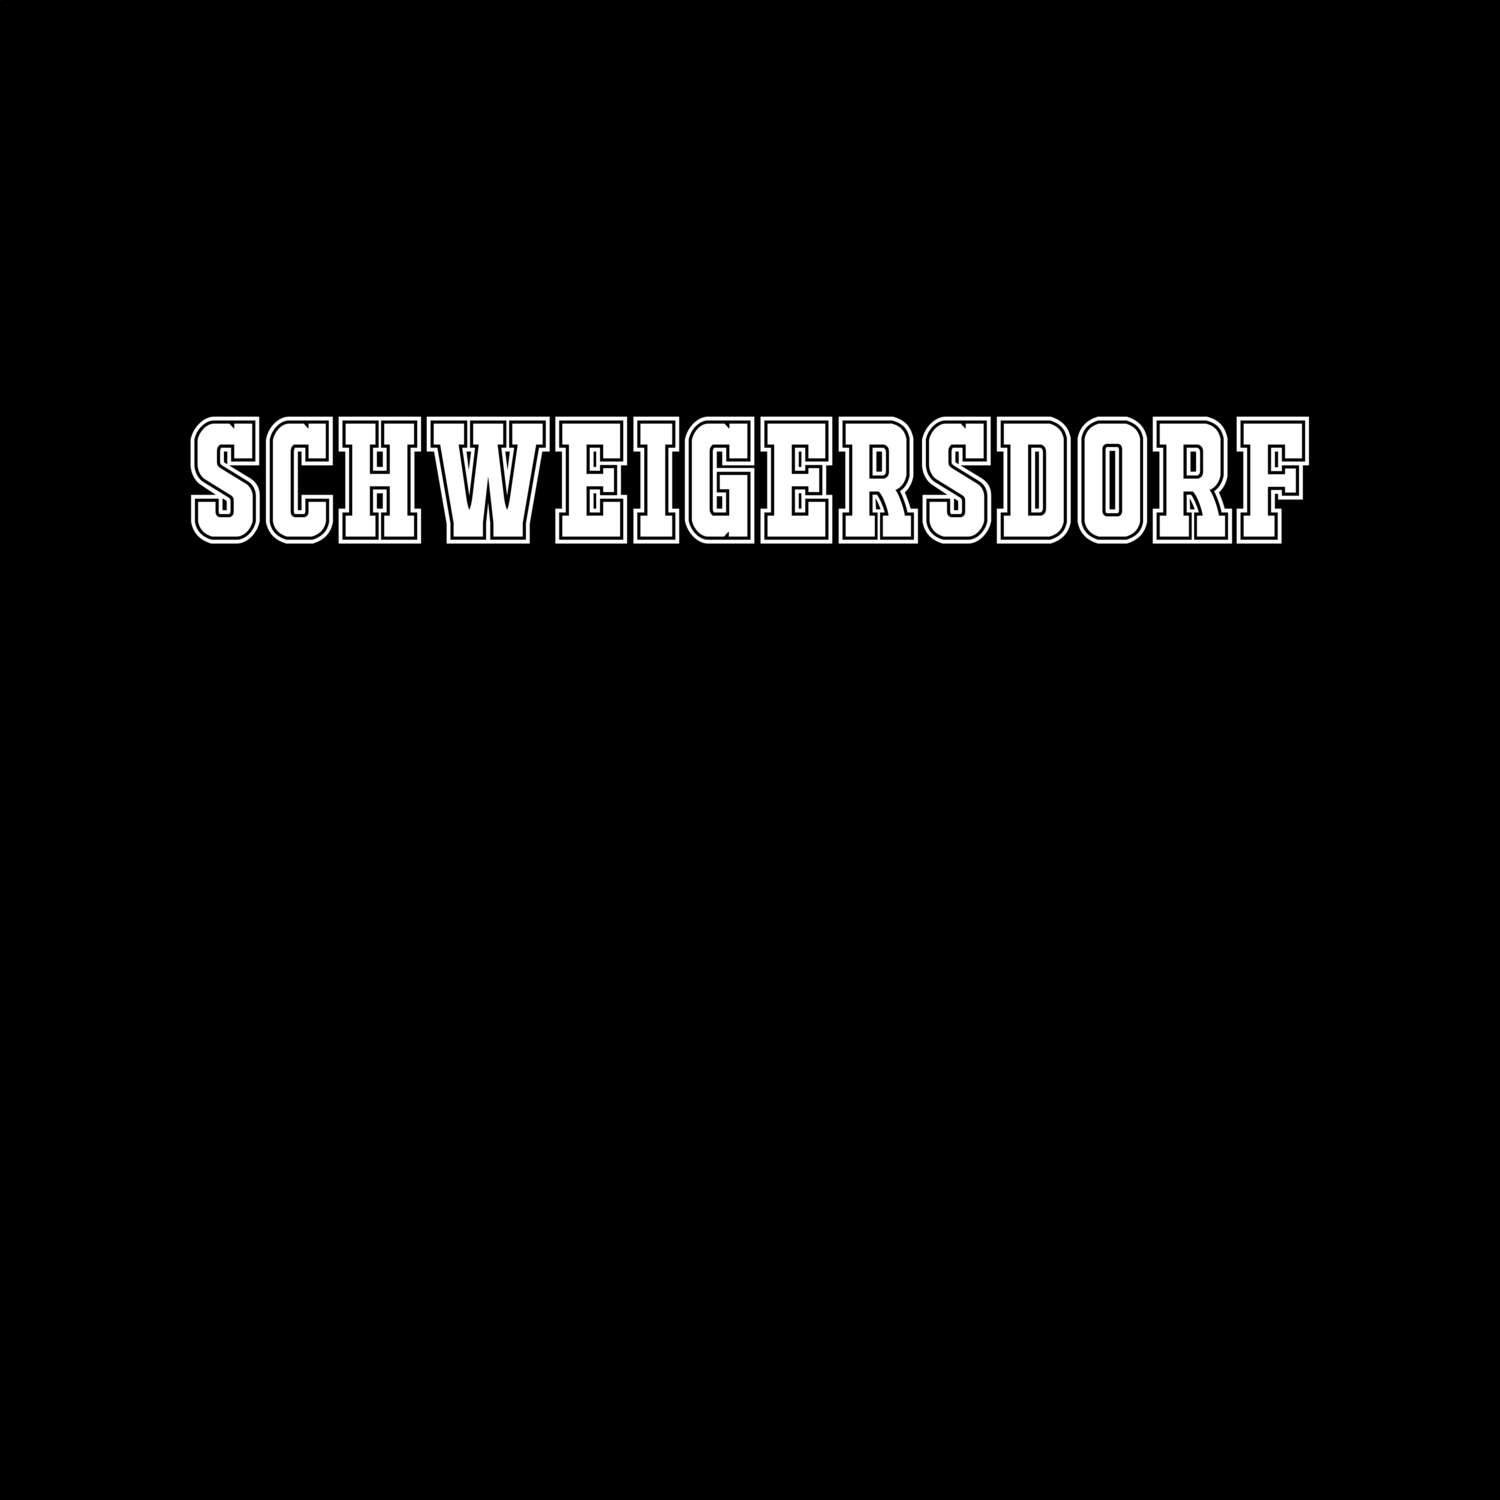 Schweigersdorf T-Shirt »Classic«